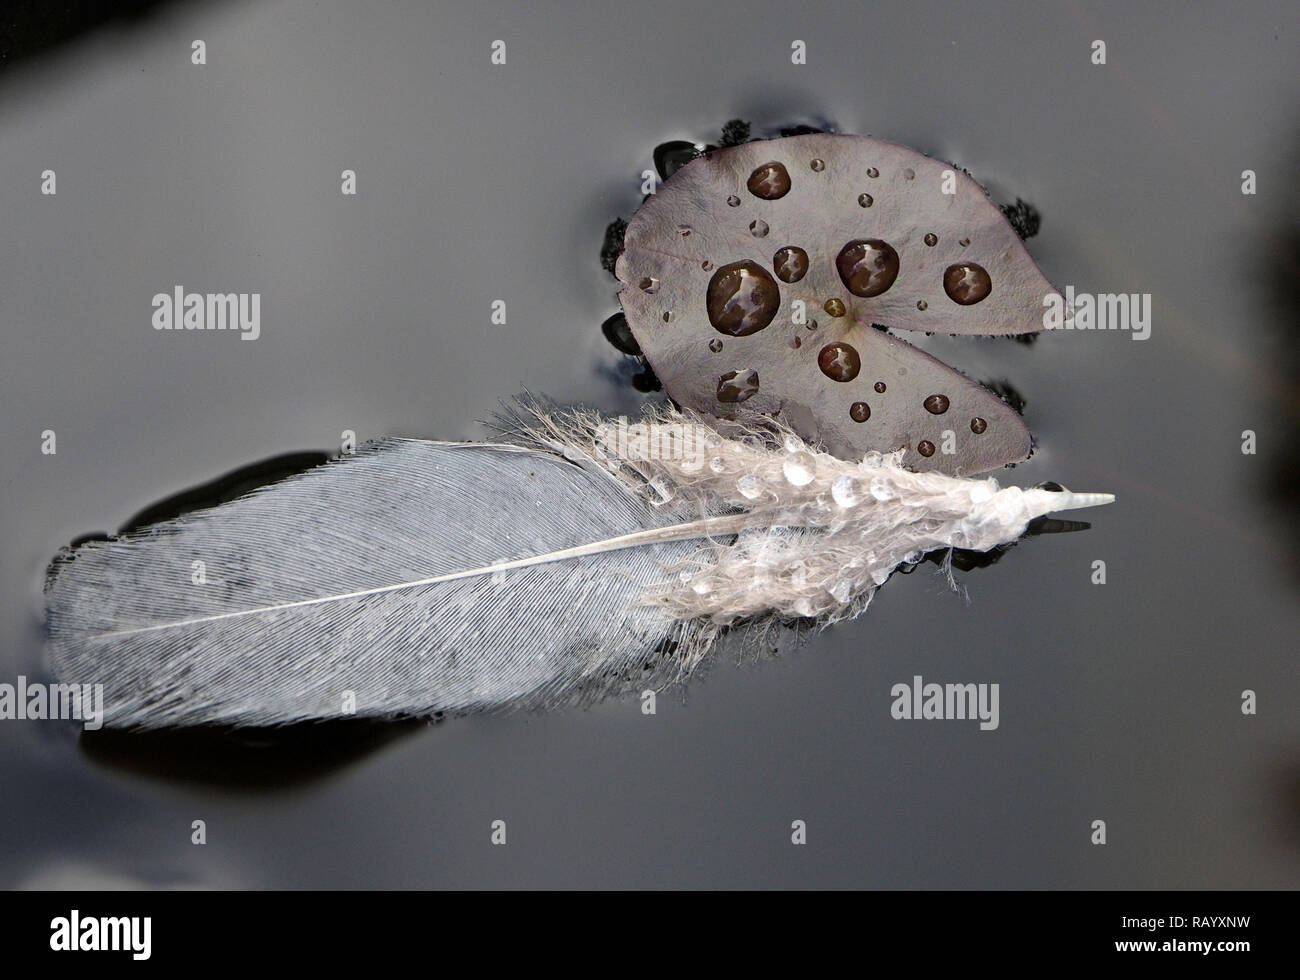 Imagen monocroma de plumas gris flotando sobre la superficie de lilypond con gotas de agua sobre la superficie de una miniatura lilypad Cumbria, Inglaterra, Reino Unido. Foto de stock